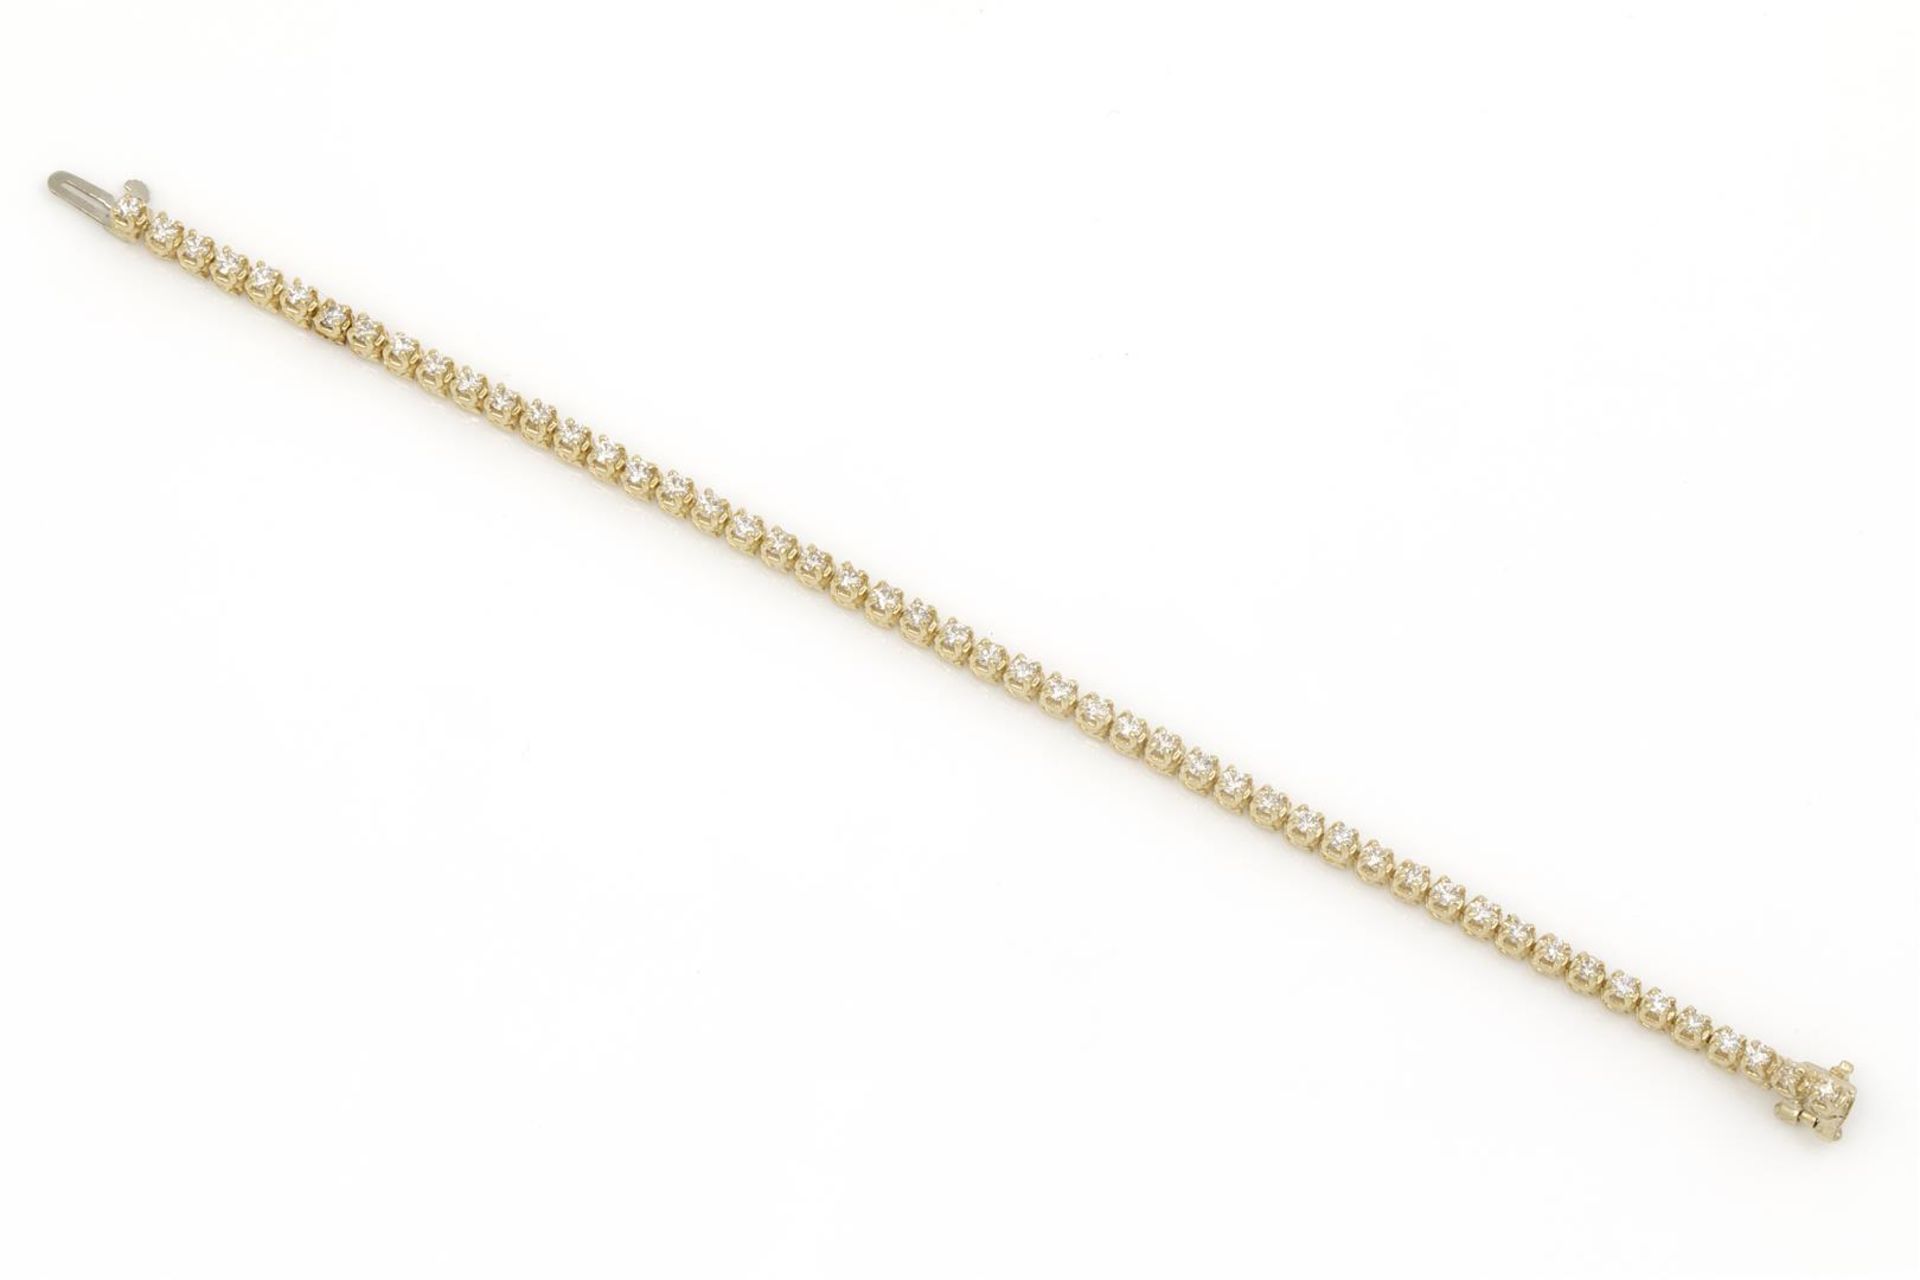 14 krt. gouden rivière armband bezet met 50 briljant geslepen diamanten, tezamen circa 1.00